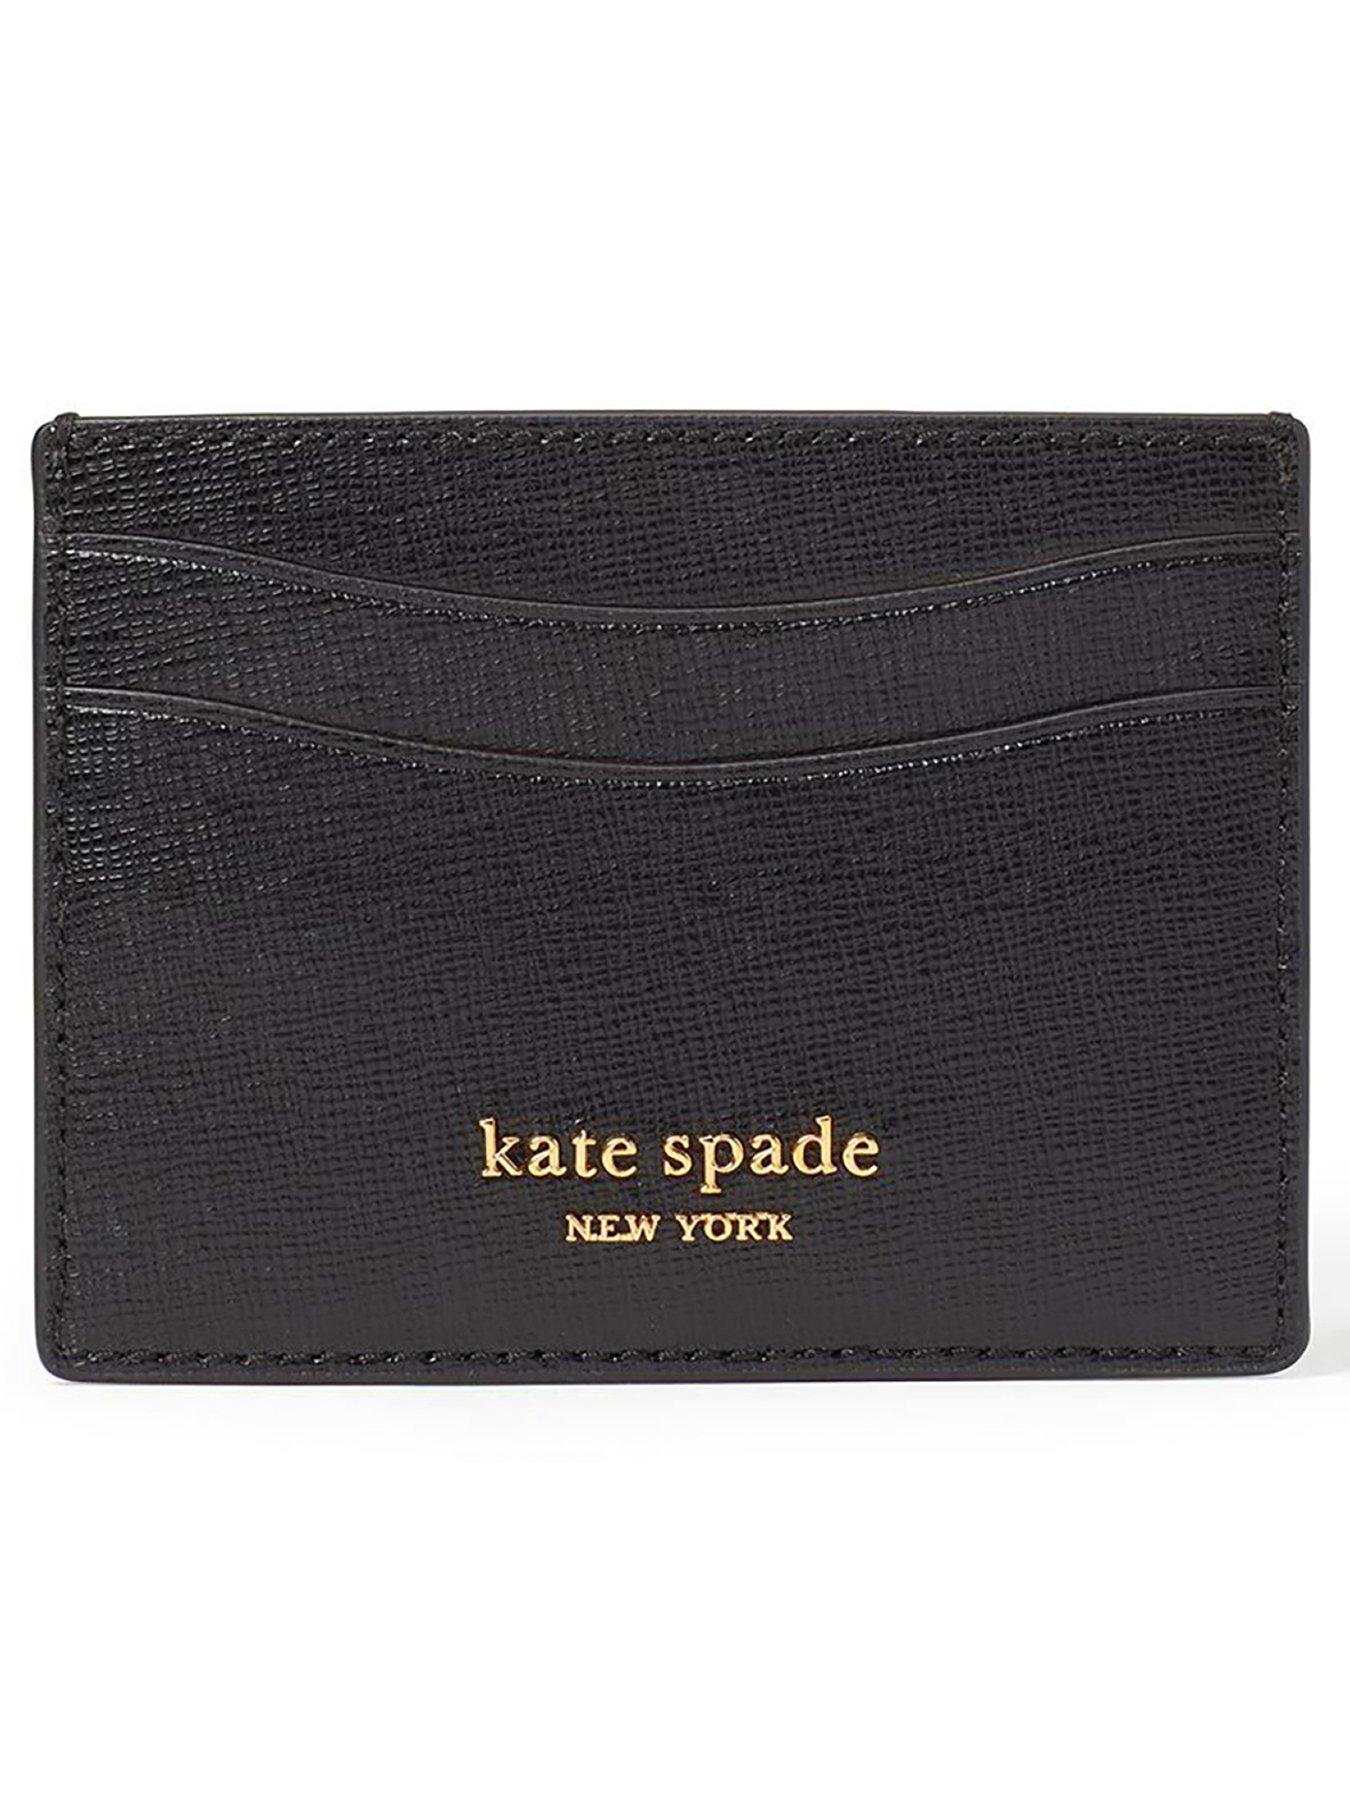 kate spade | Bags | Purse Kate Spade Nwt Small Satchel Black K | Poshmark